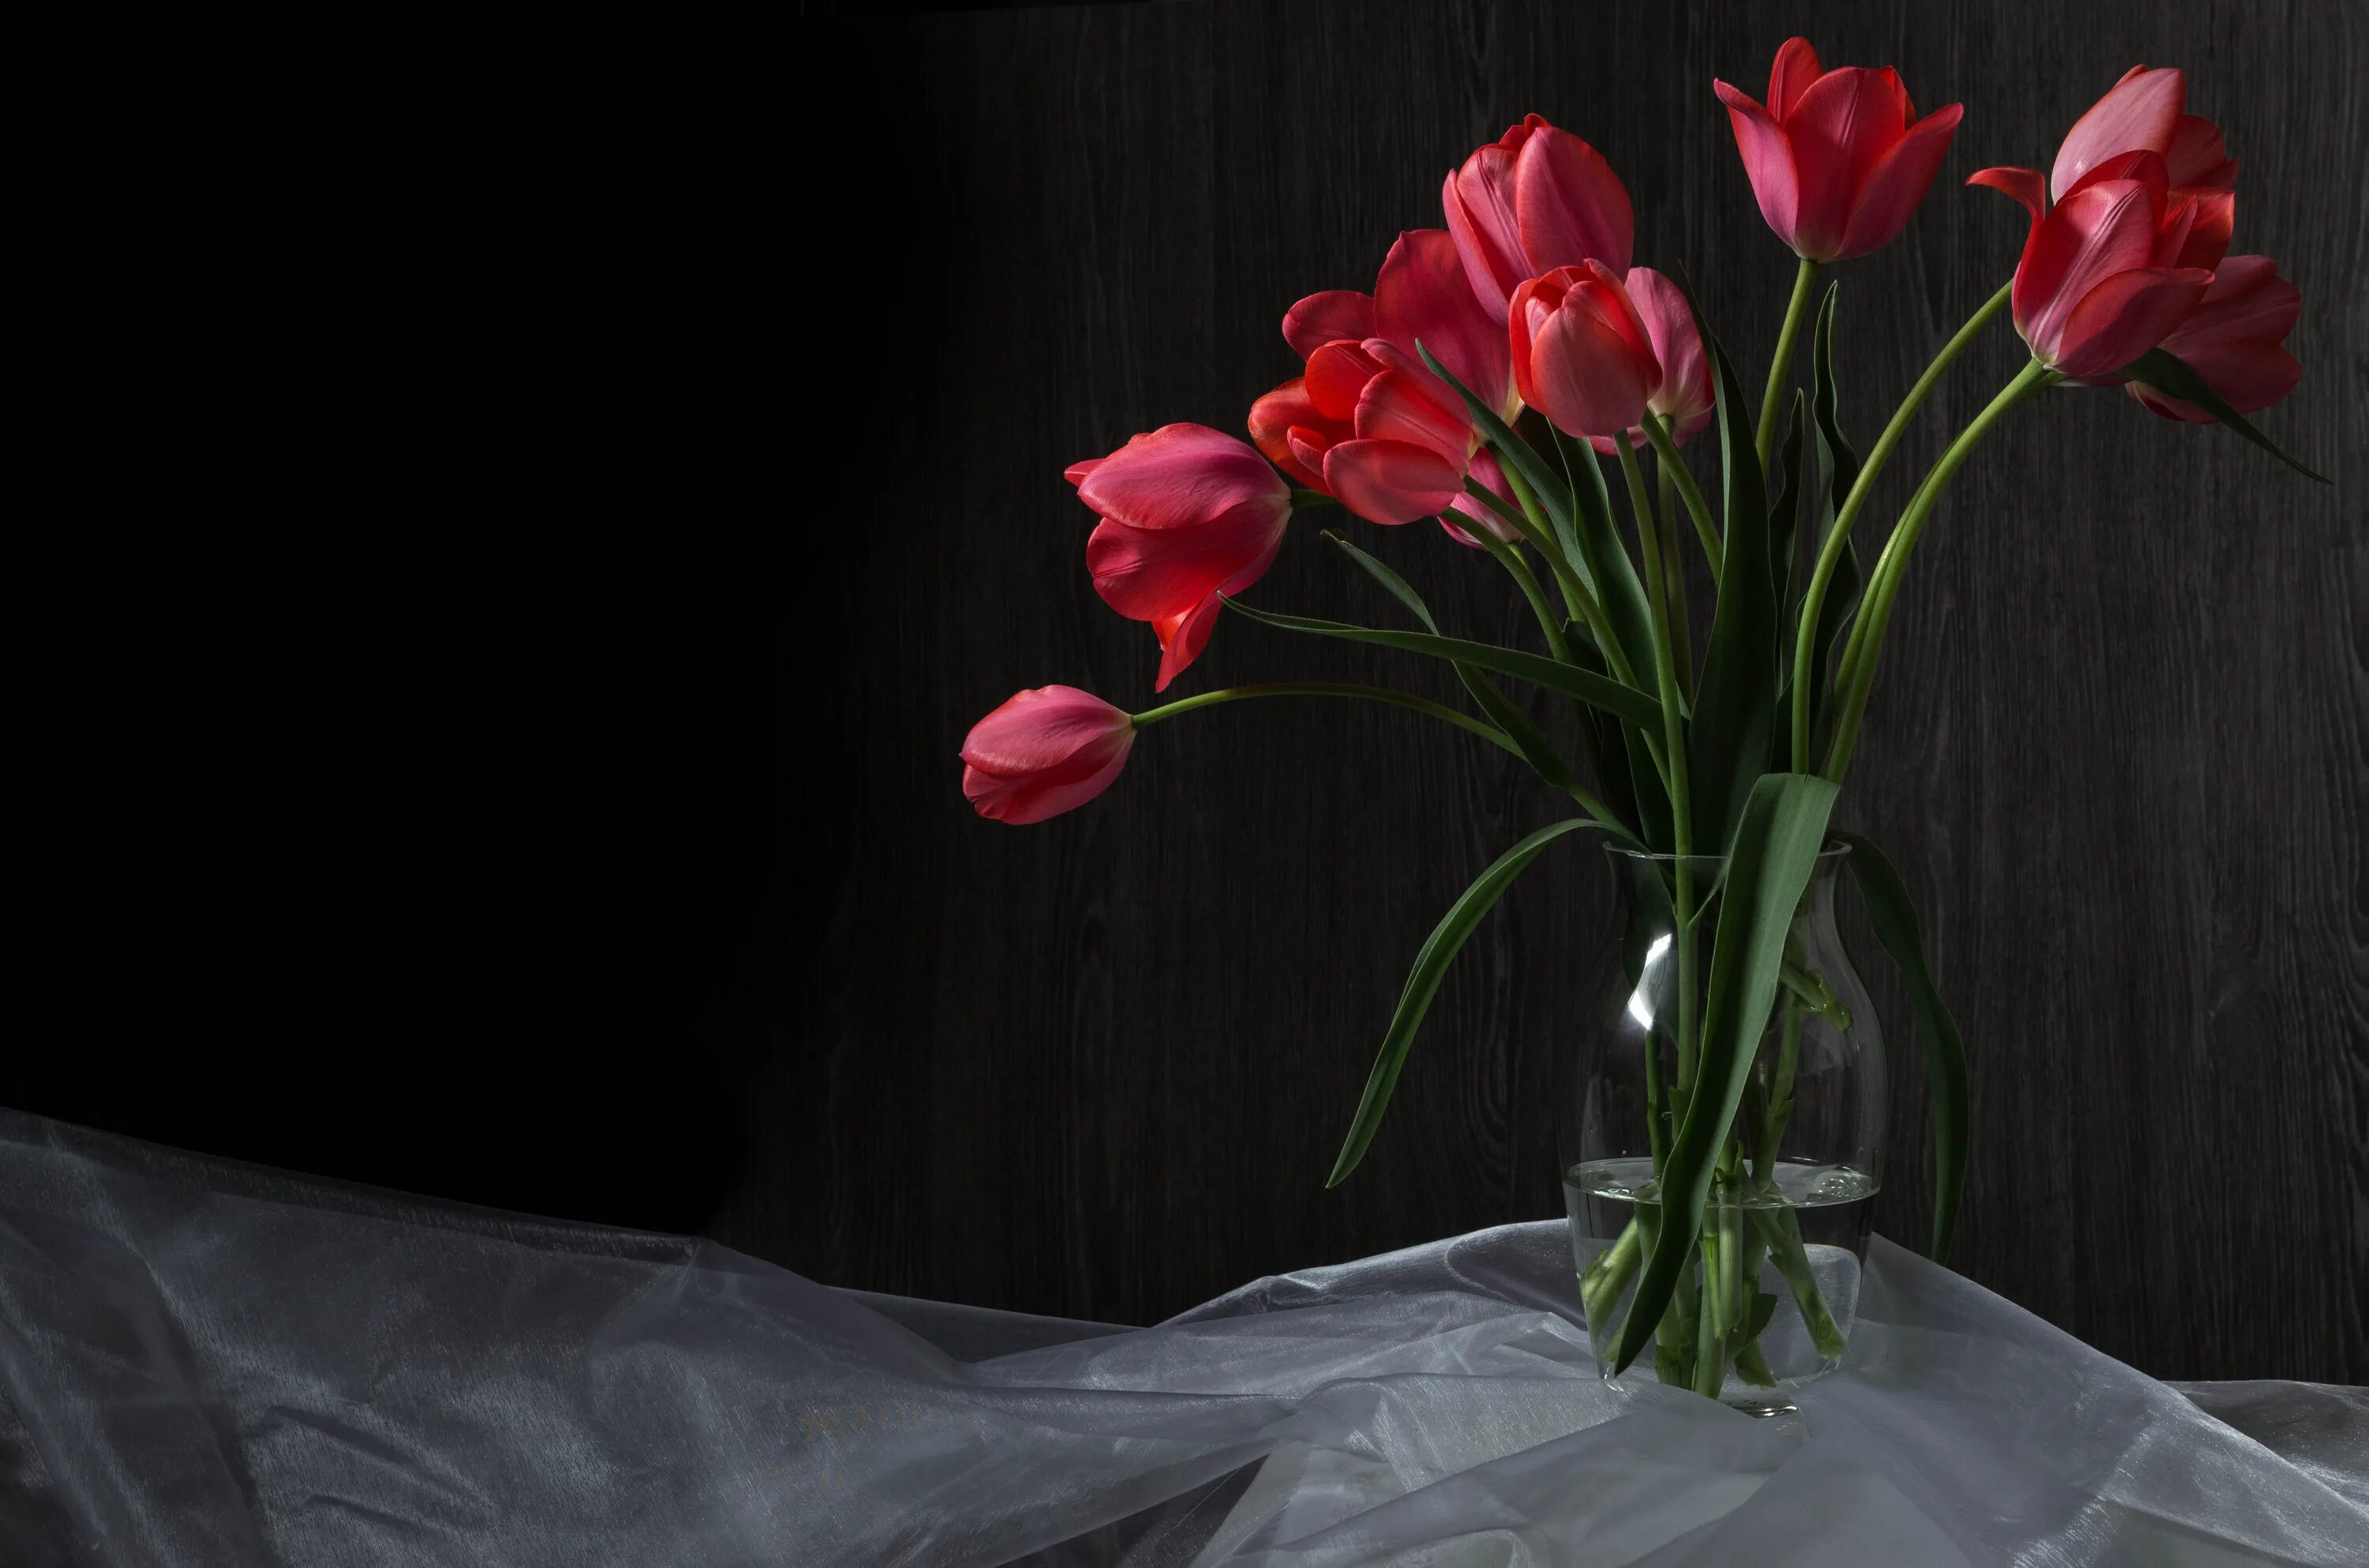 Фото тюльпаны в вазе на столе. Тюльпаны в вазе. Букет тюльпанов в вазе. Красные тюльпаны. Красные тюльпаны в вазе.